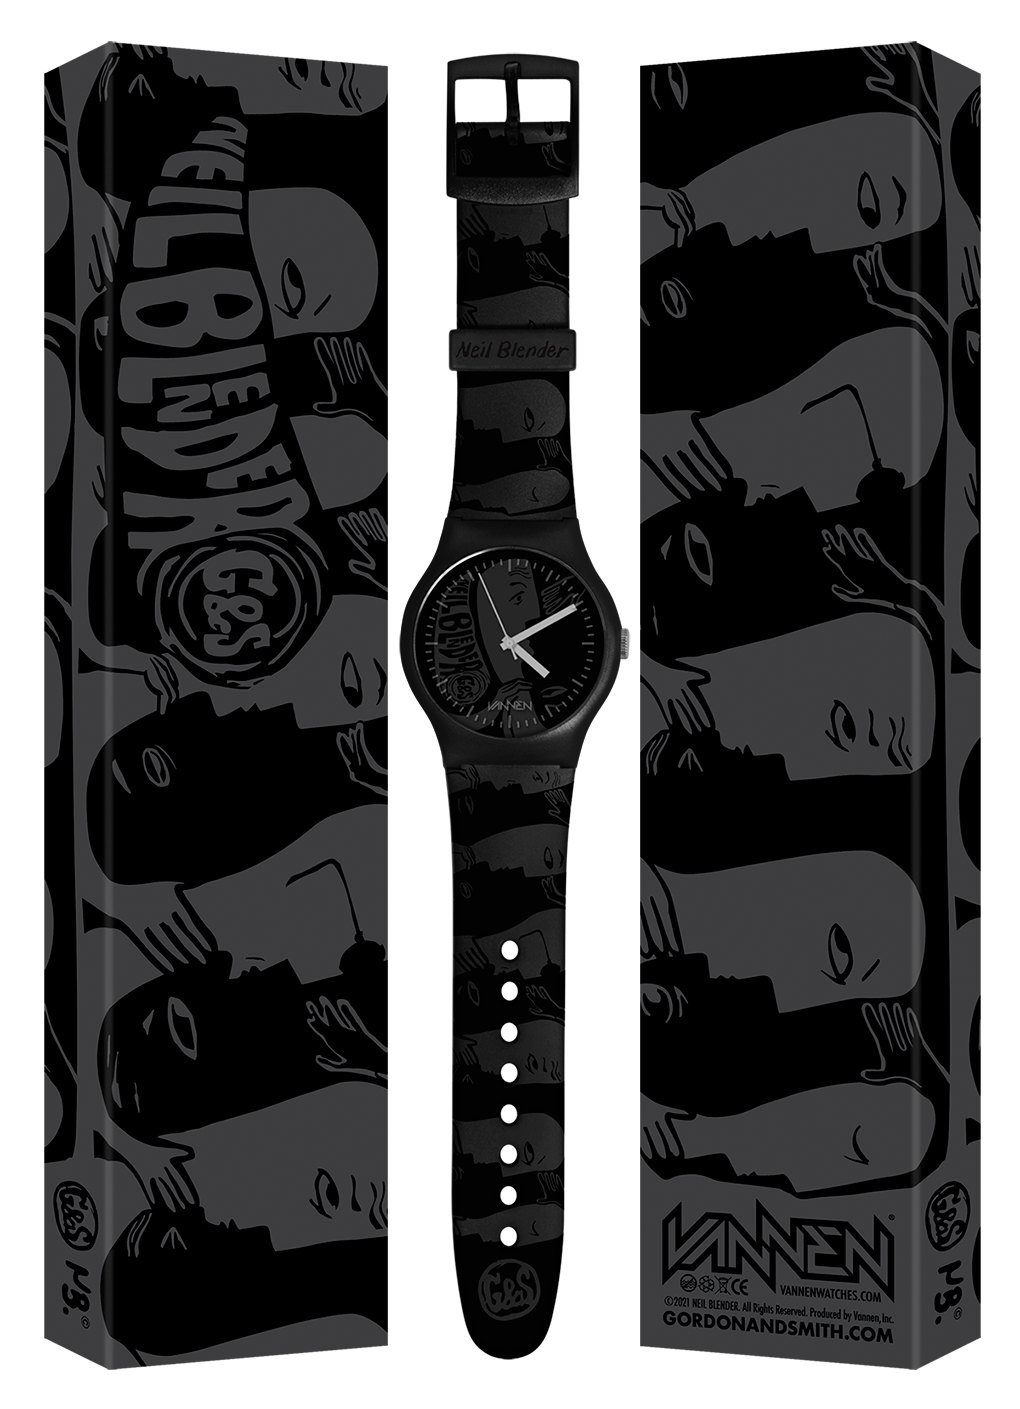 Limited edition Neil Blender “Faces” black variant Vannen watch